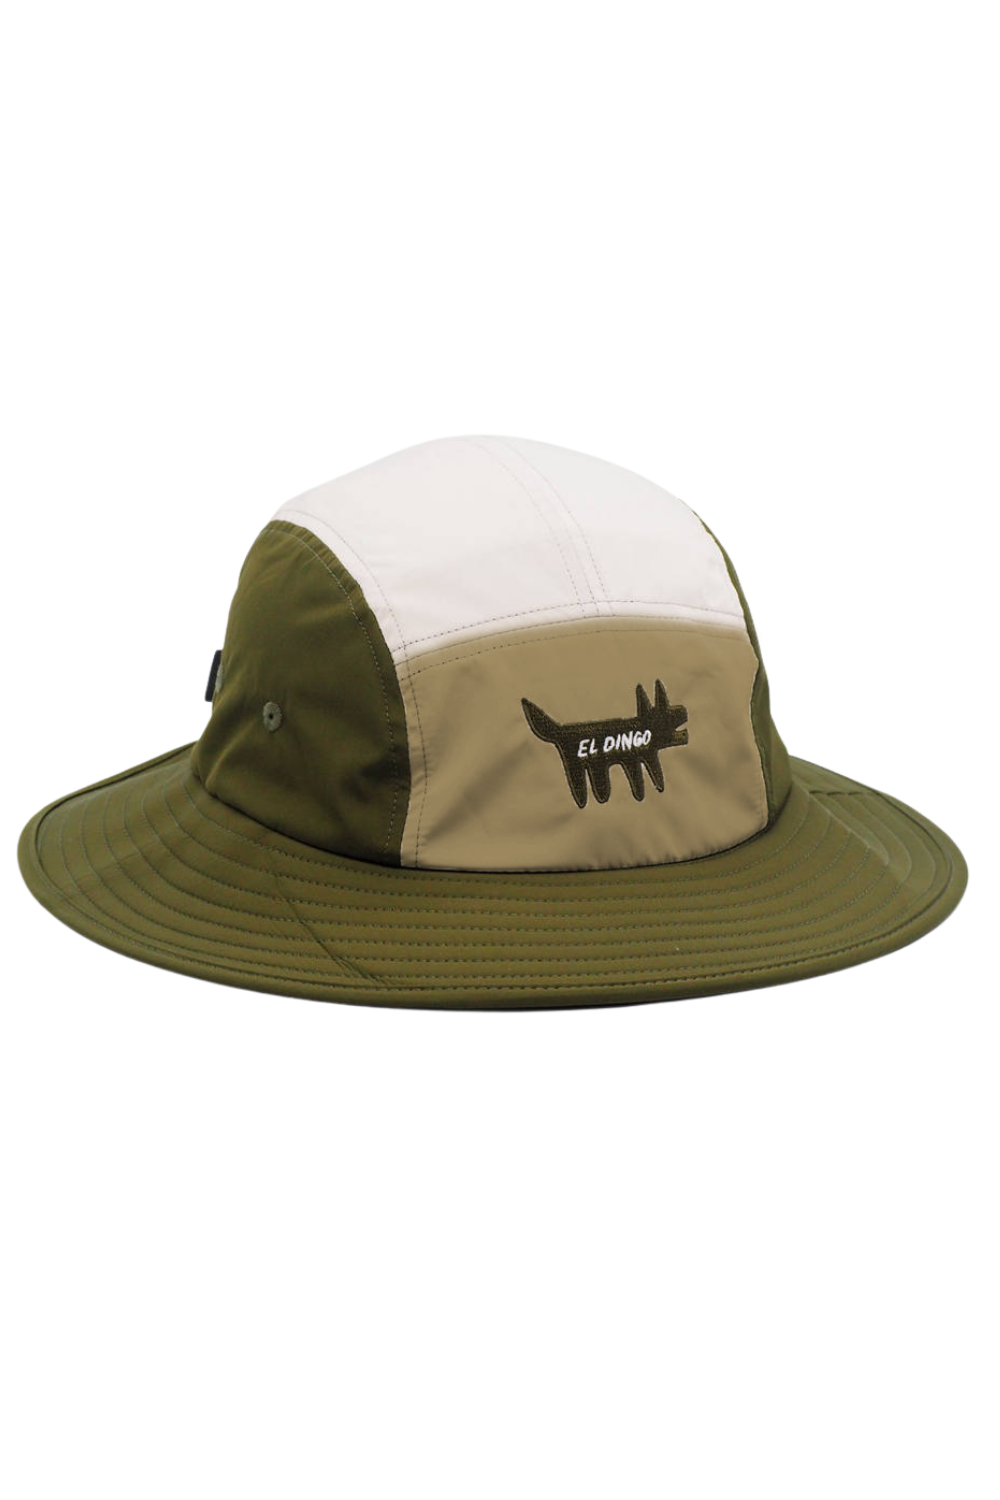 Forest Green Wide Brim Surf Bucket Hat - El Dingo